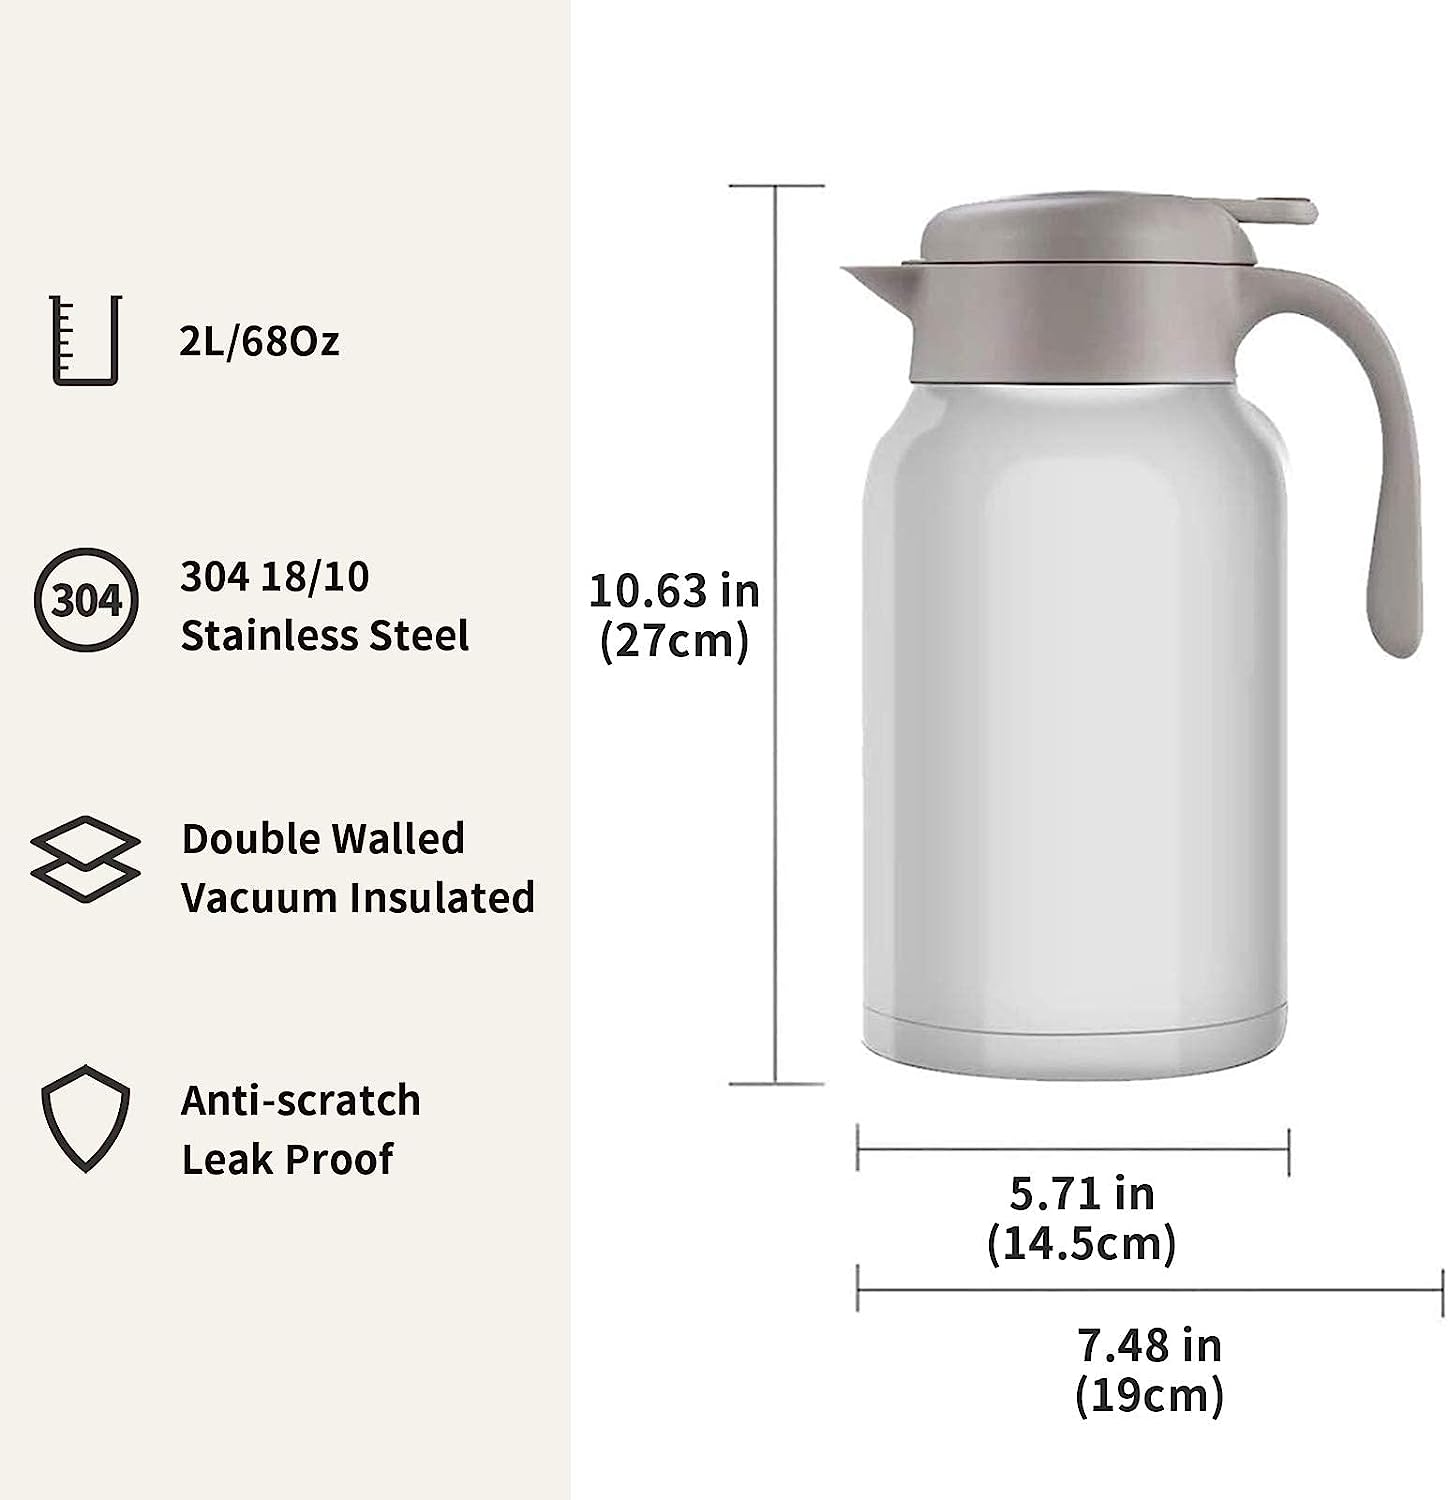 Luvan Stainless steel european press vacuum insulated pitcher, 2.0 L